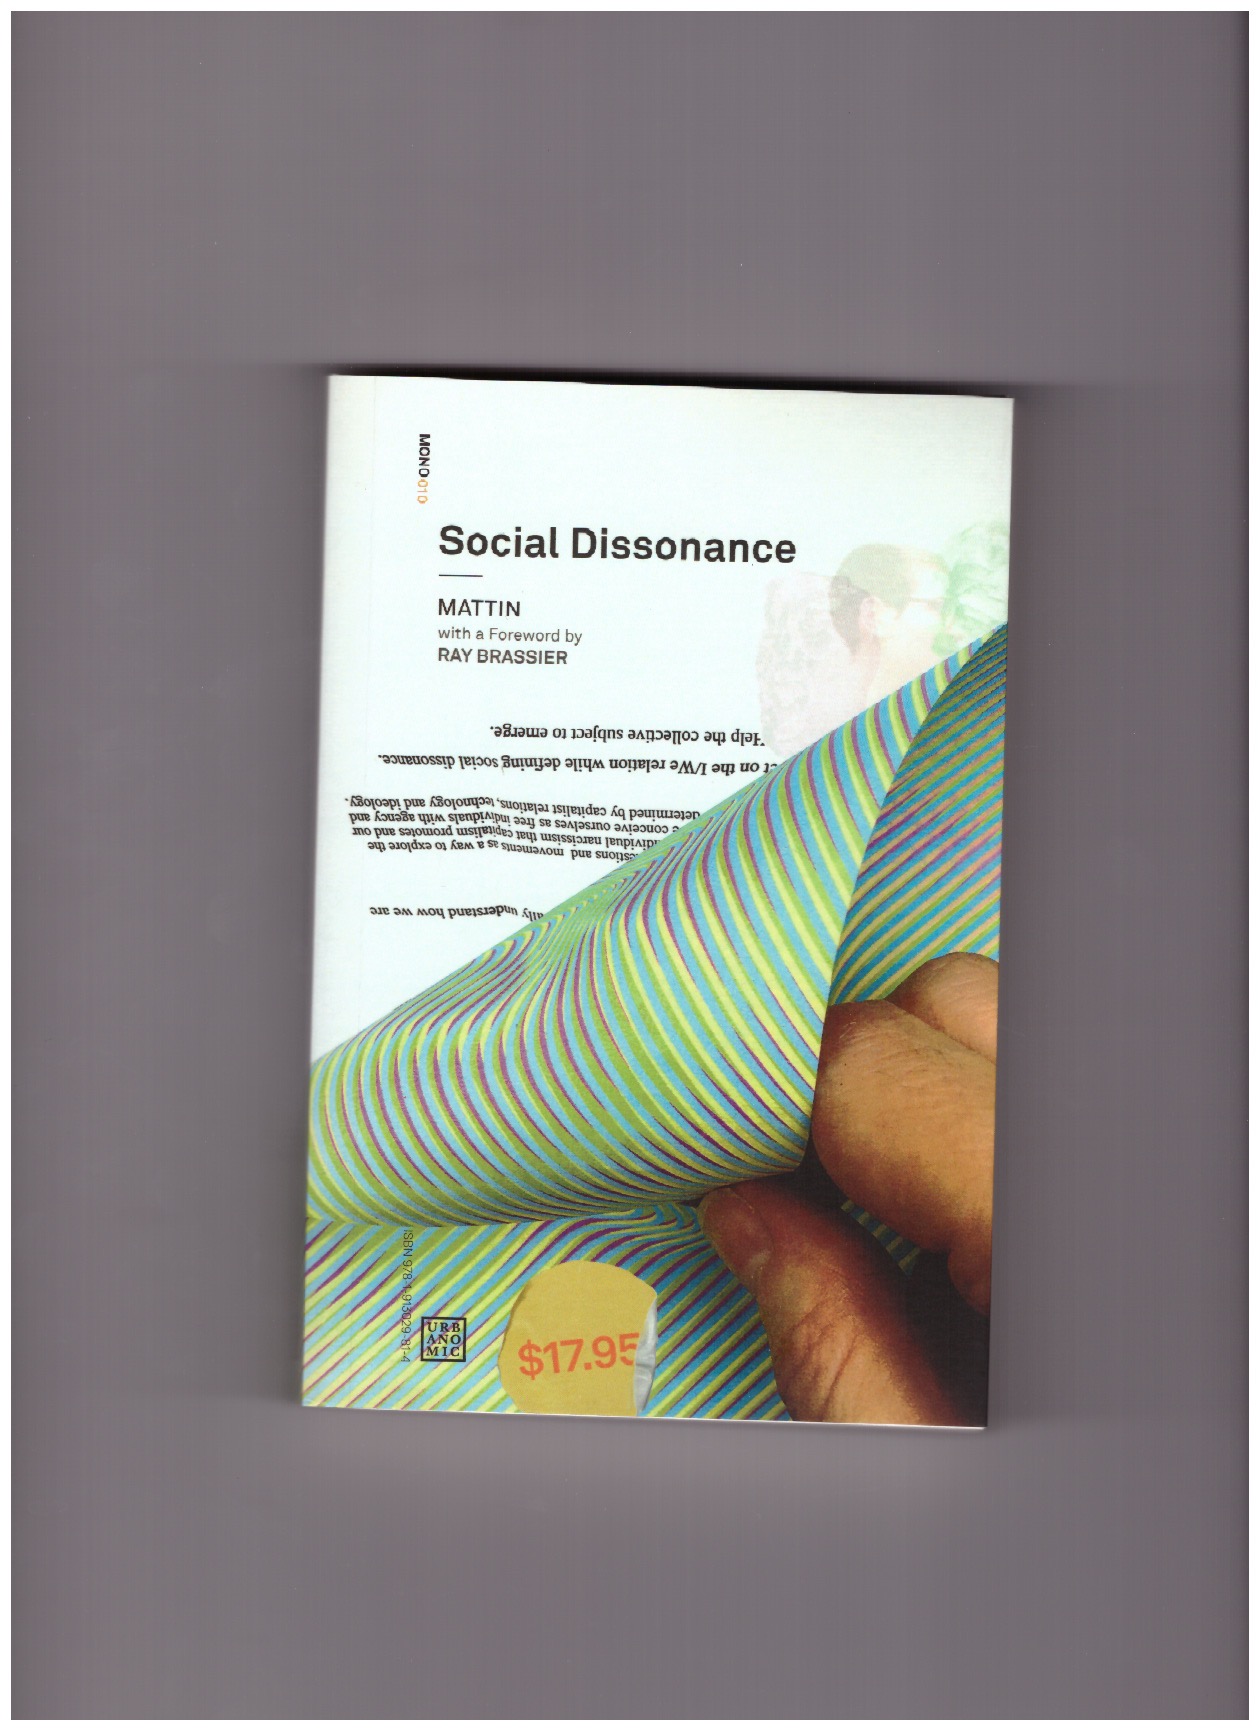 MATTIN - Social Dissonance